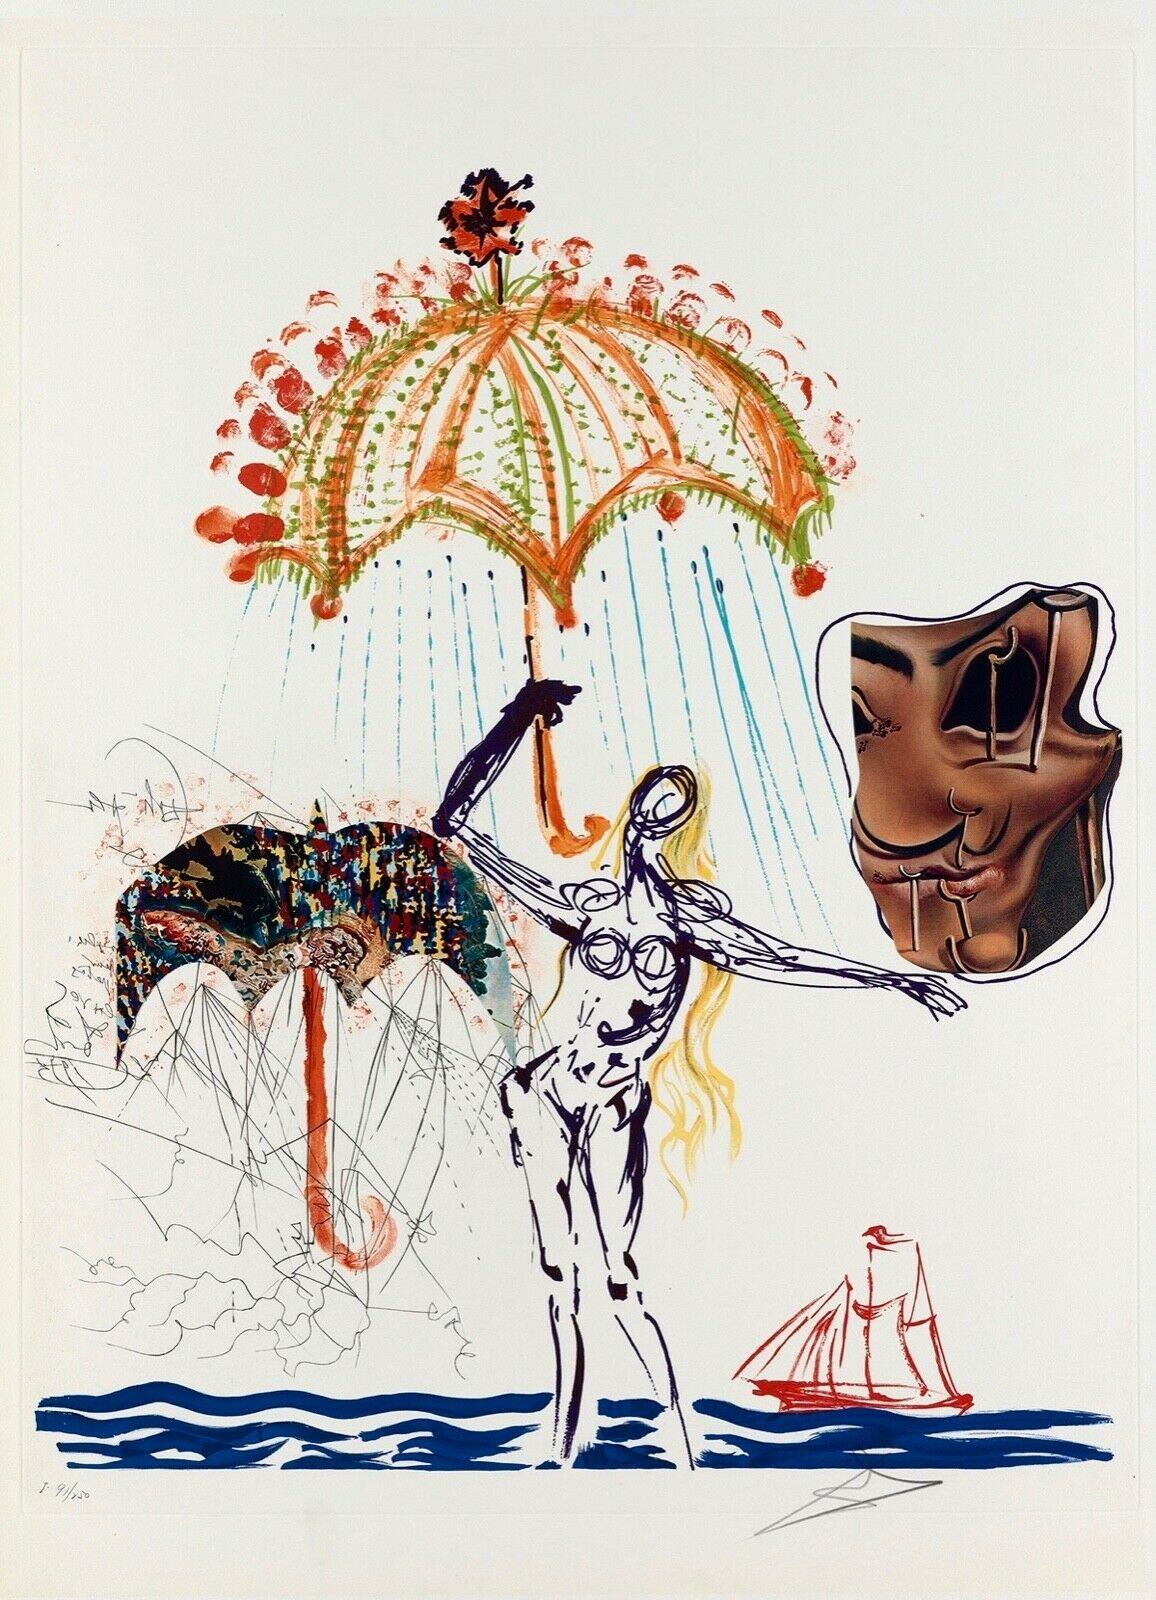 Landscape Print Salvador Dalí - Umbrella avec liquide atomisé (Imagination et objets), Salvador Dali